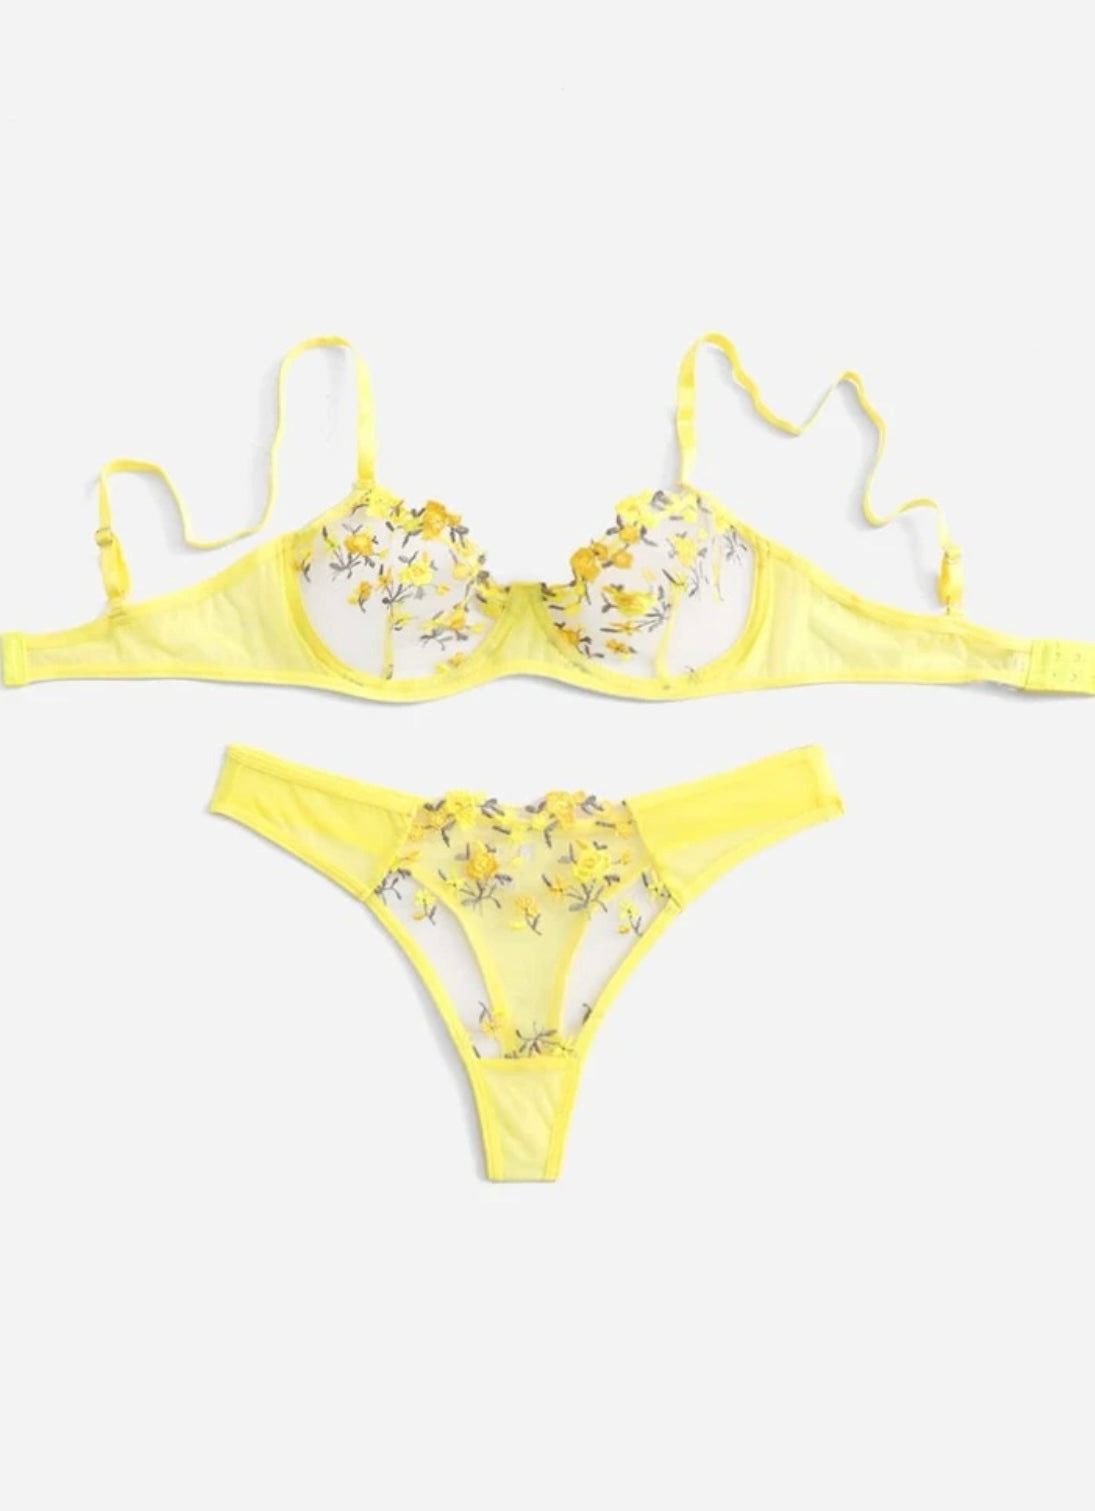 Yellow lingerie